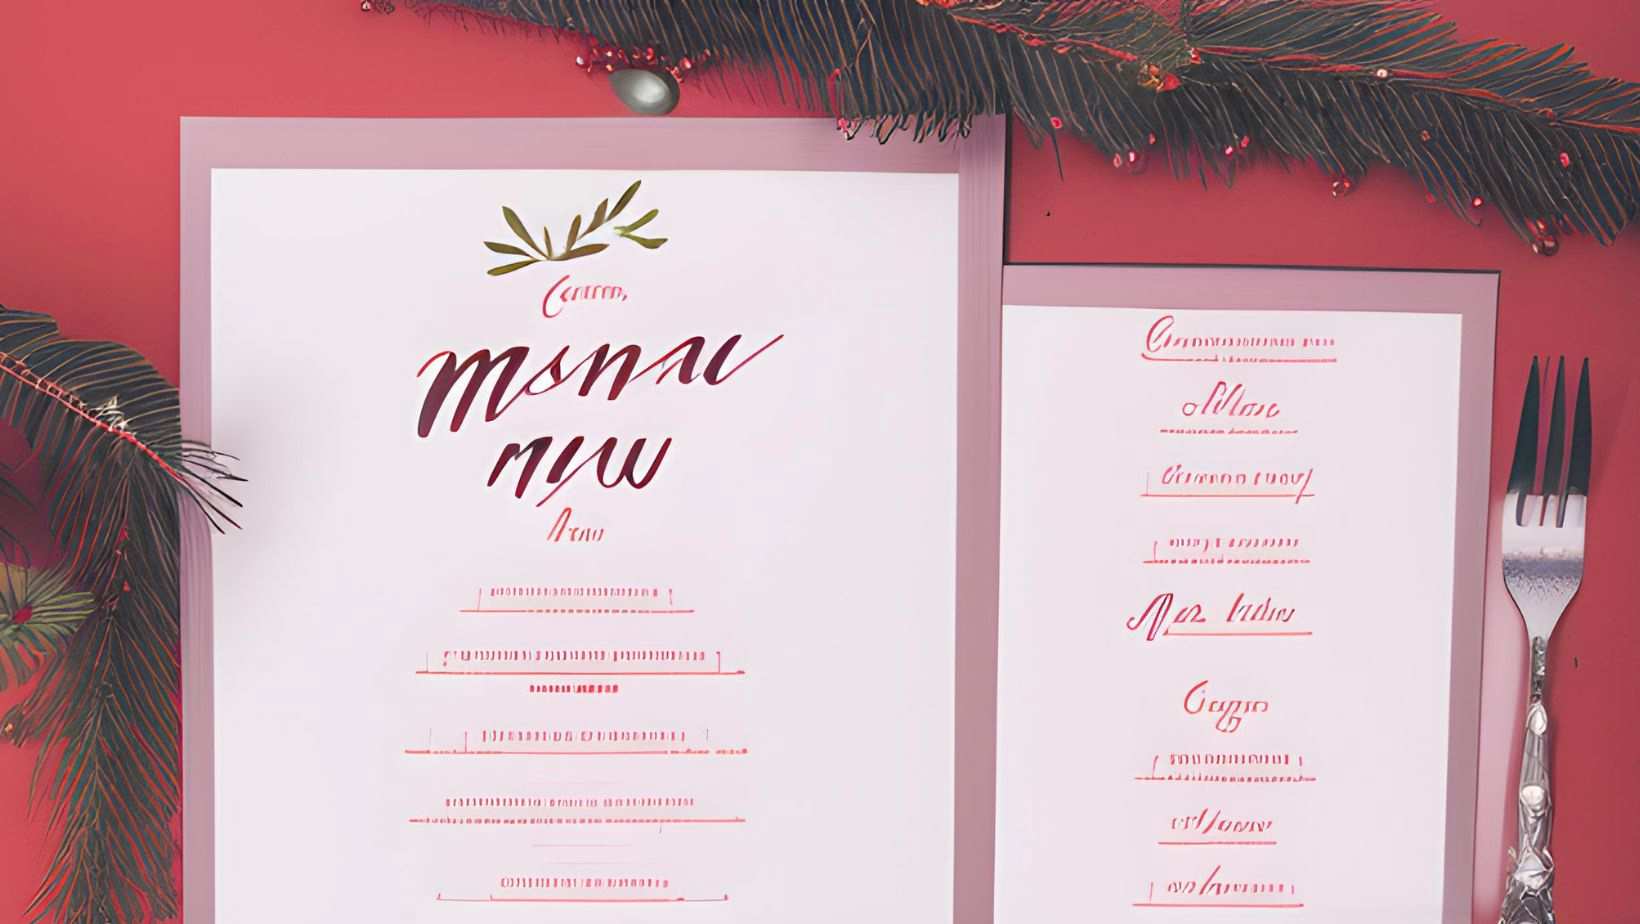 Sample restaurant menu for holiday marketing